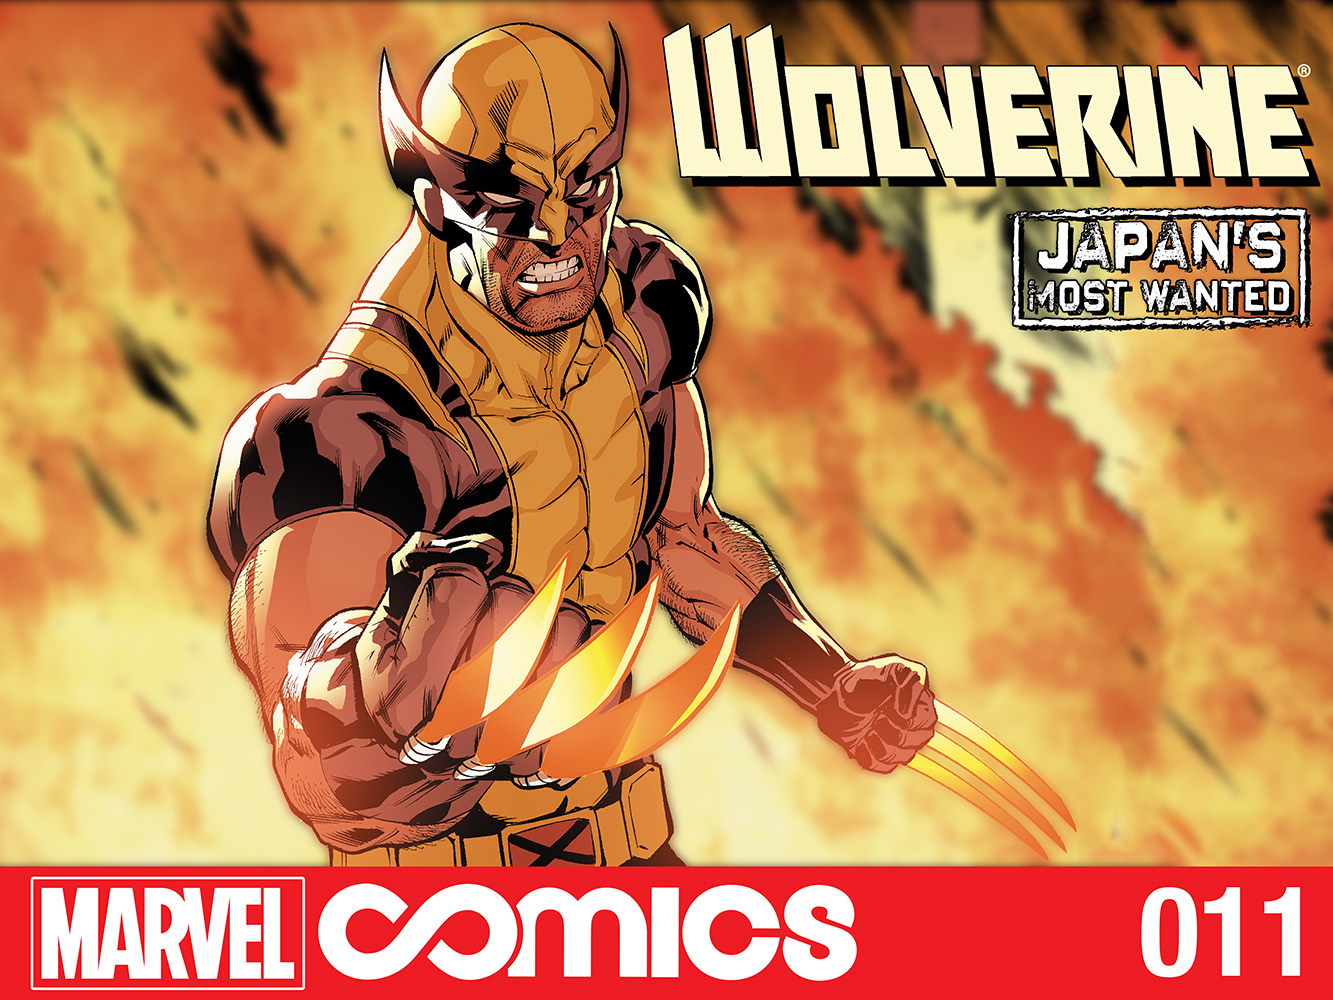 Wolverine: Japan's Most Wanted #11 hits Infinite Comics today | BrutalGamer